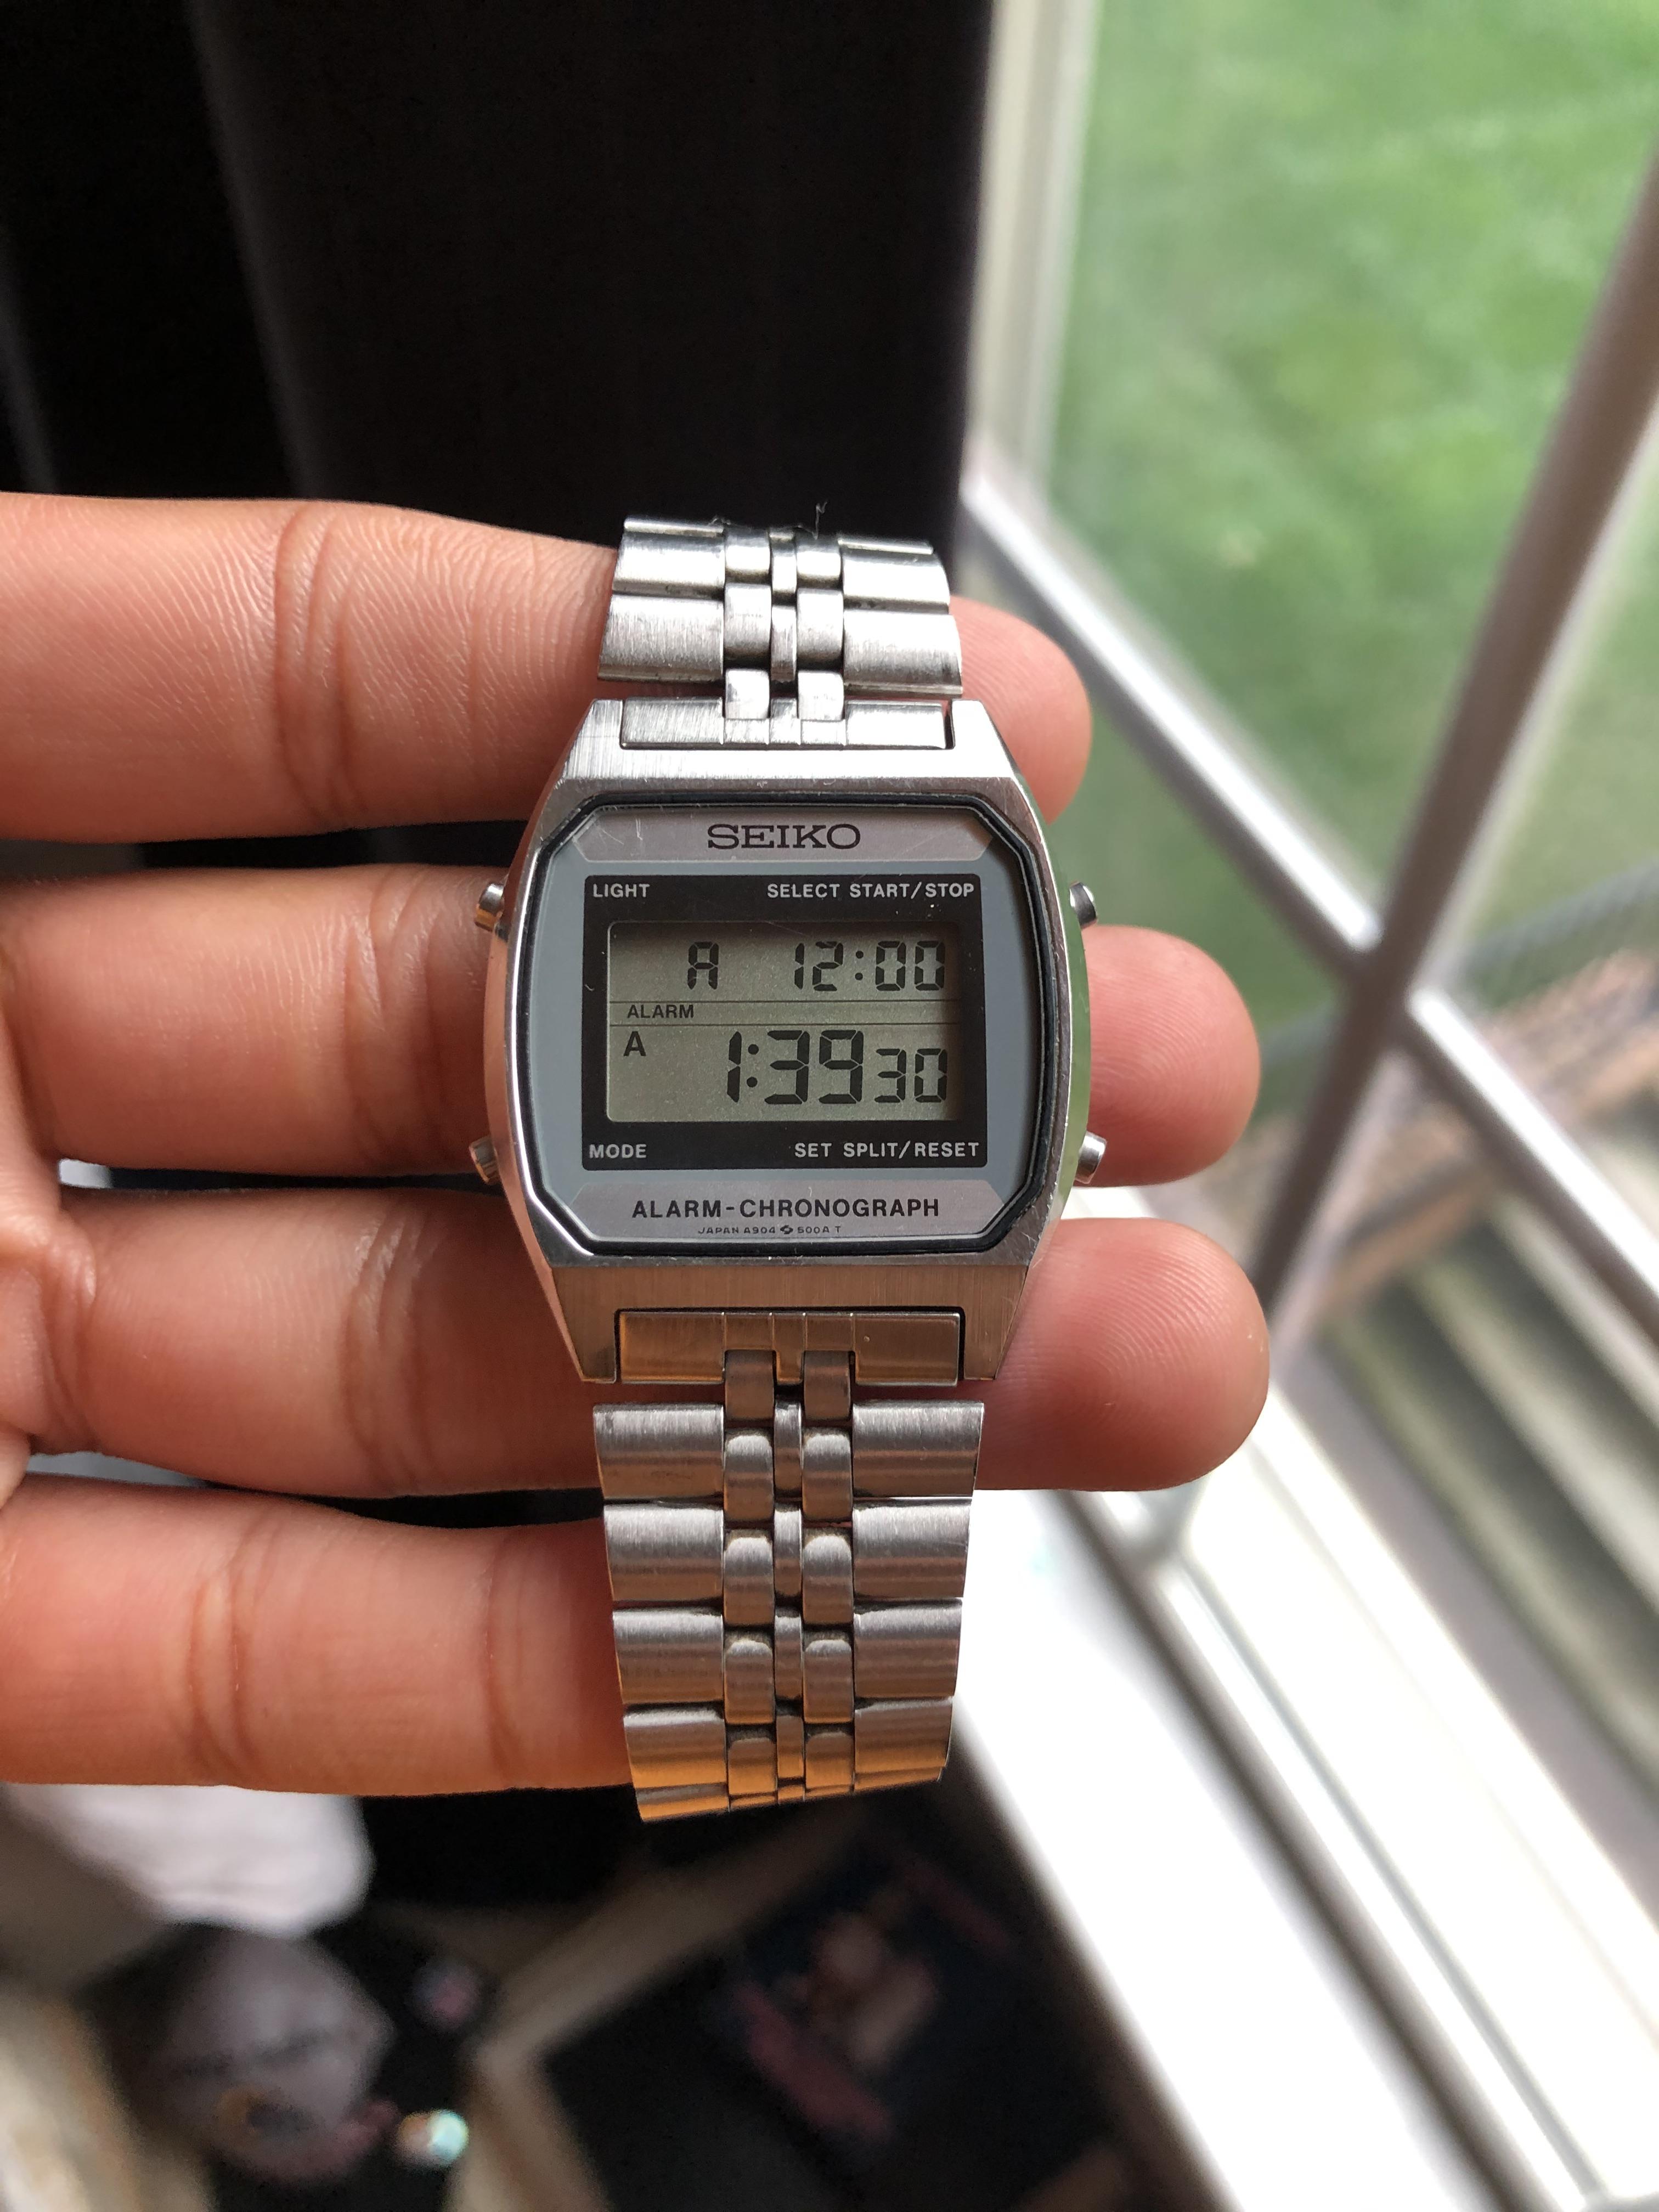 WTS] 1995 Seiko A904-5000 Alarm-Chronograph Watch | WatchCharts